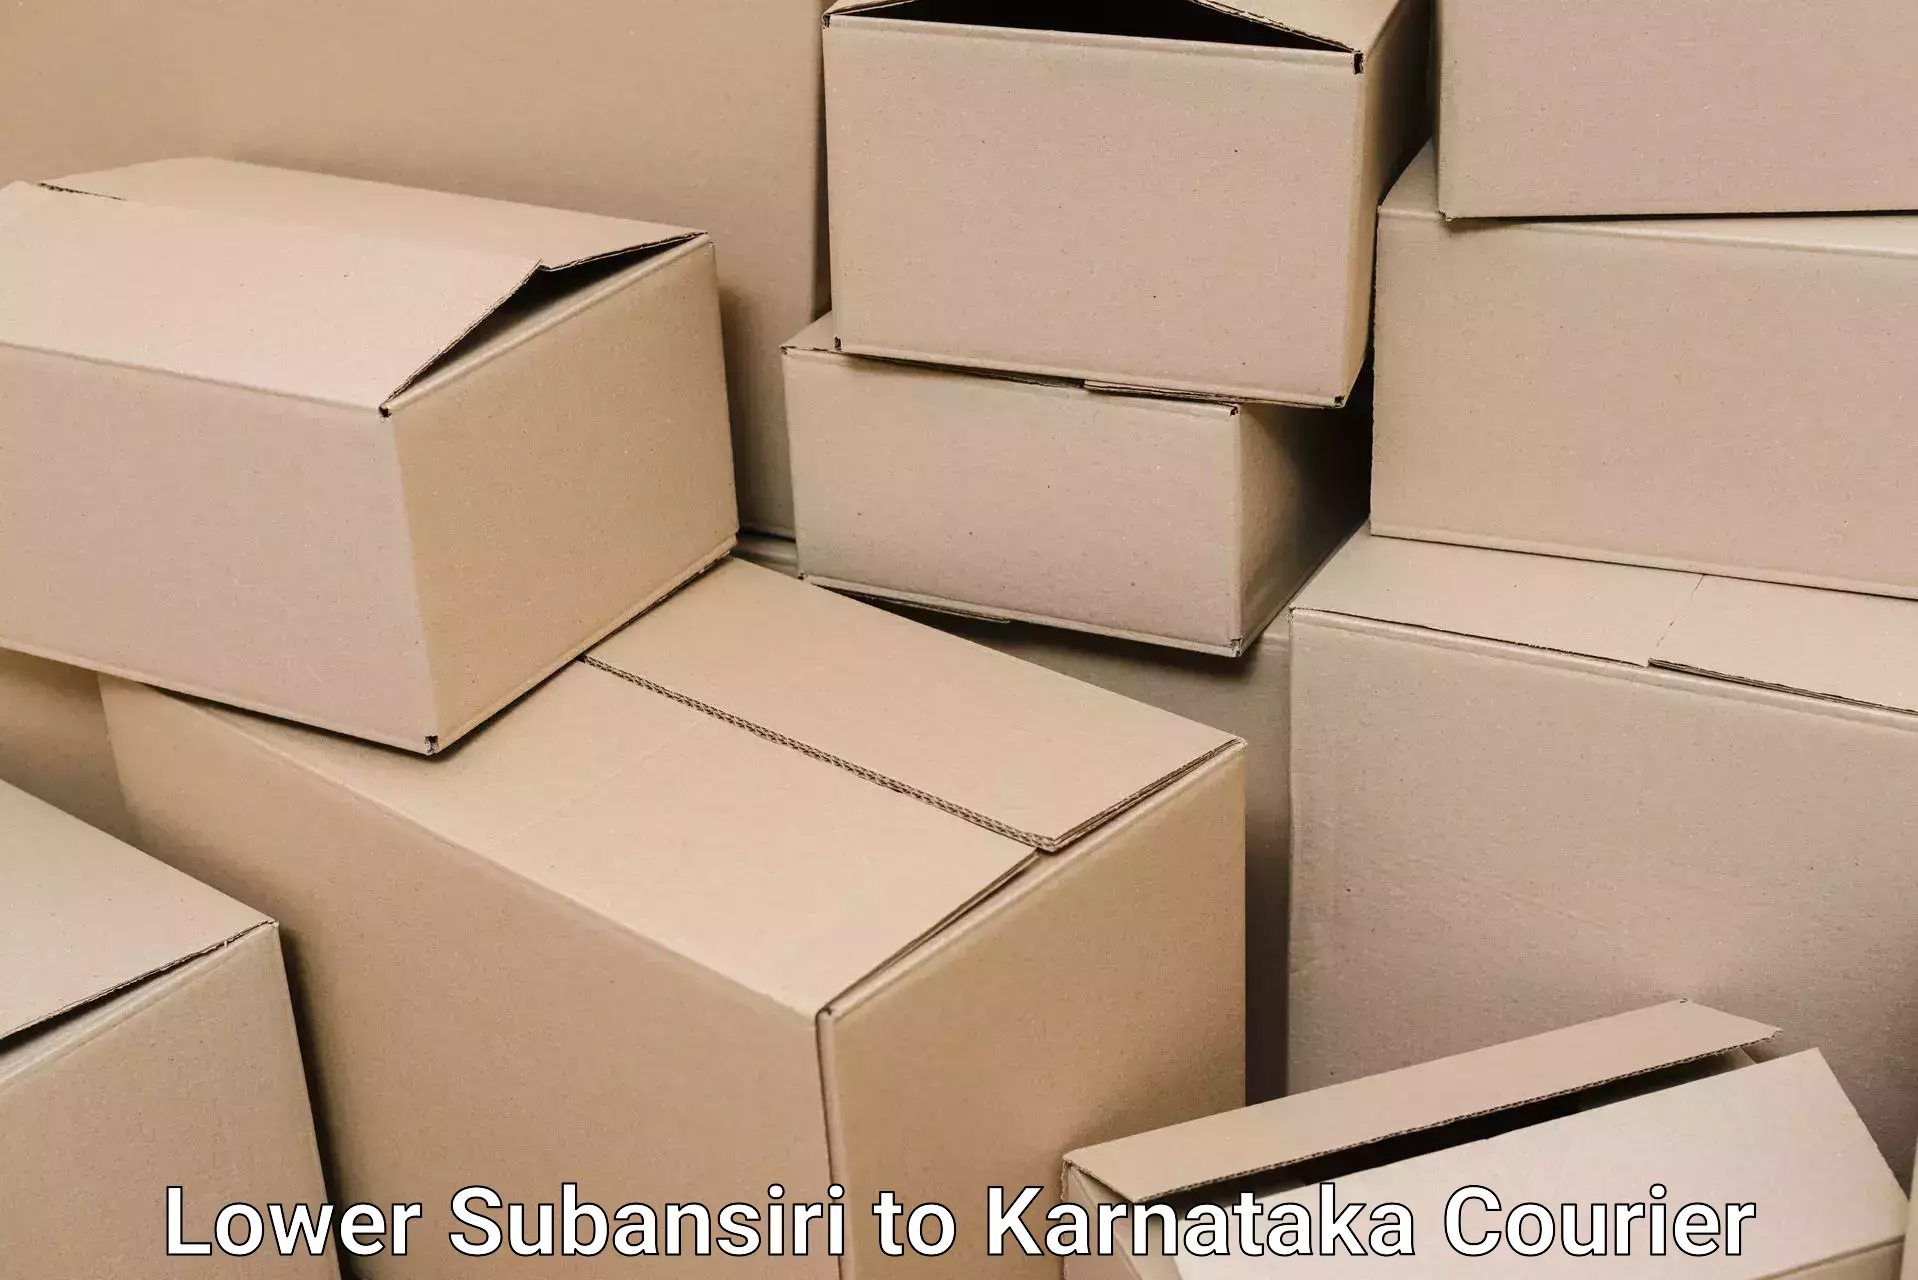 Furniture delivery service Lower Subansiri to Nanjangud